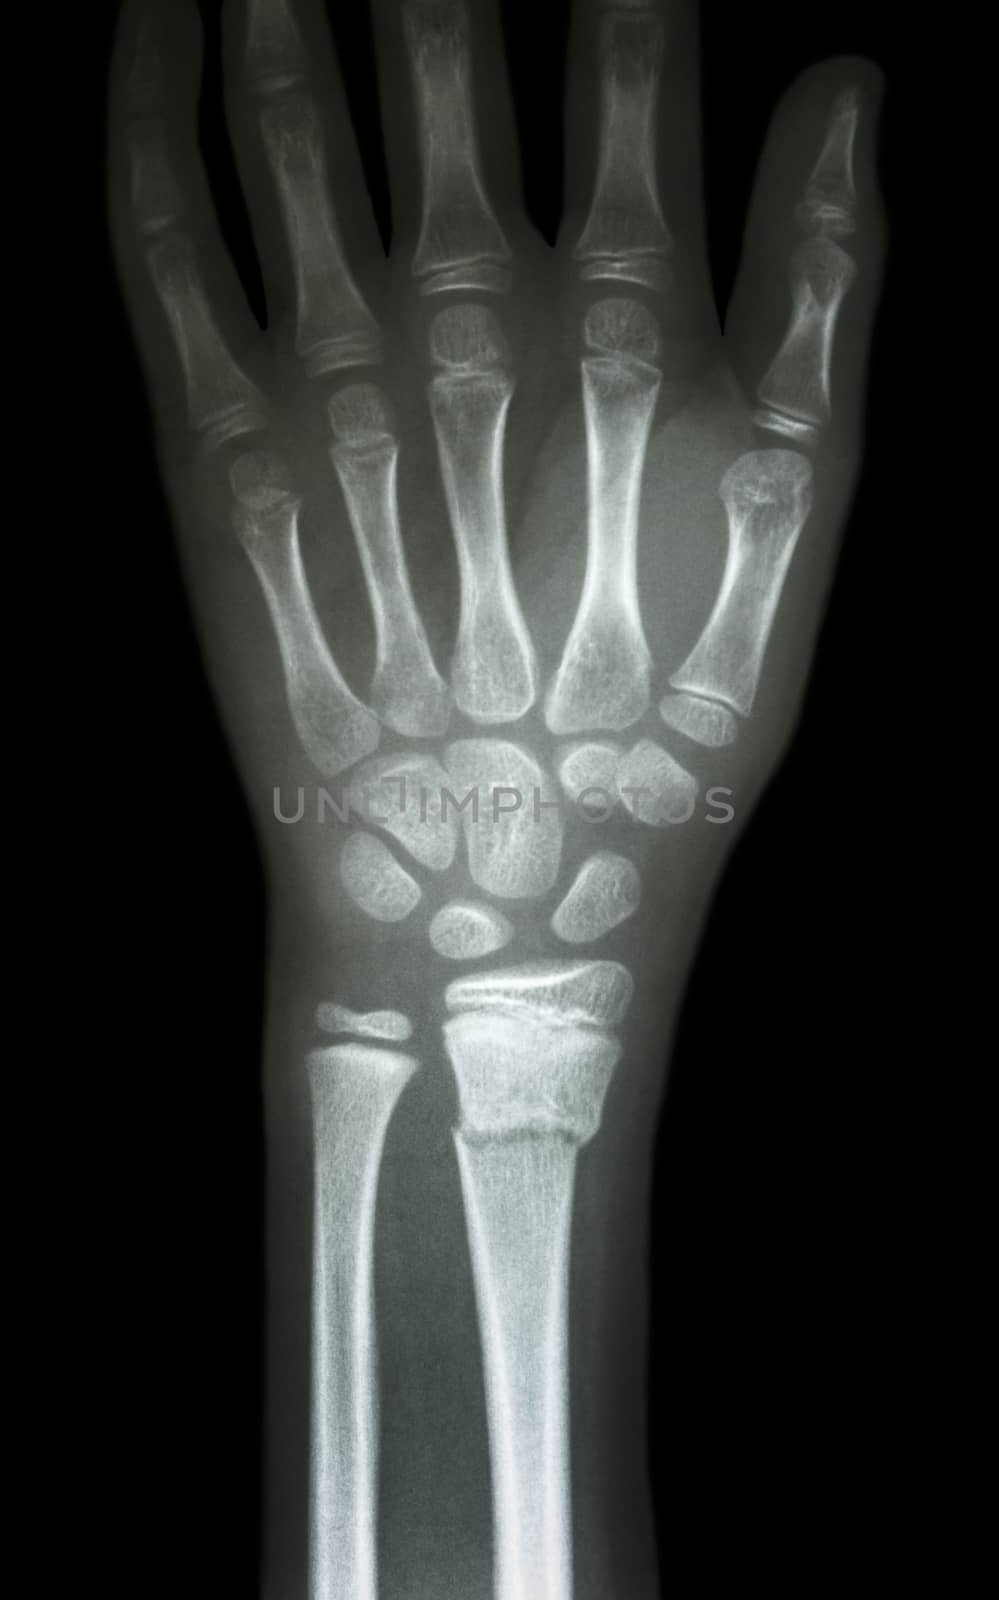 fiilm x-ray wrist show fracture distal radius (forearm's bone)